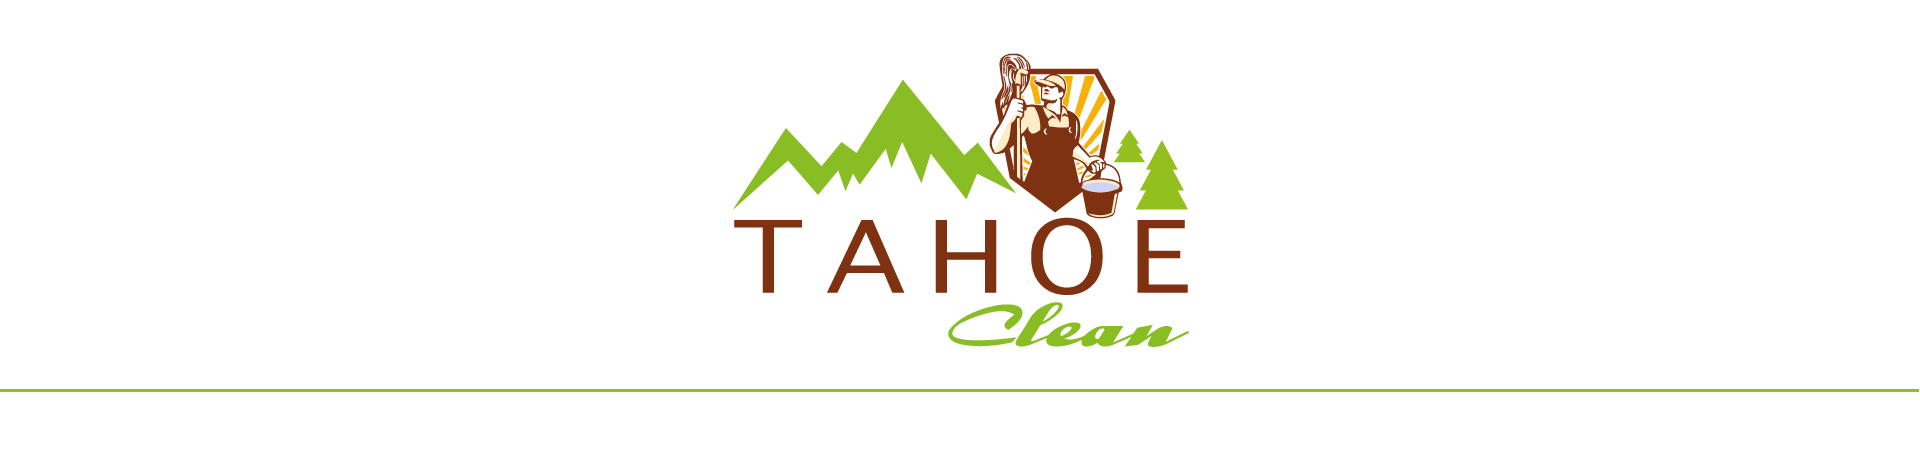 Tahoe Clean Home Banner